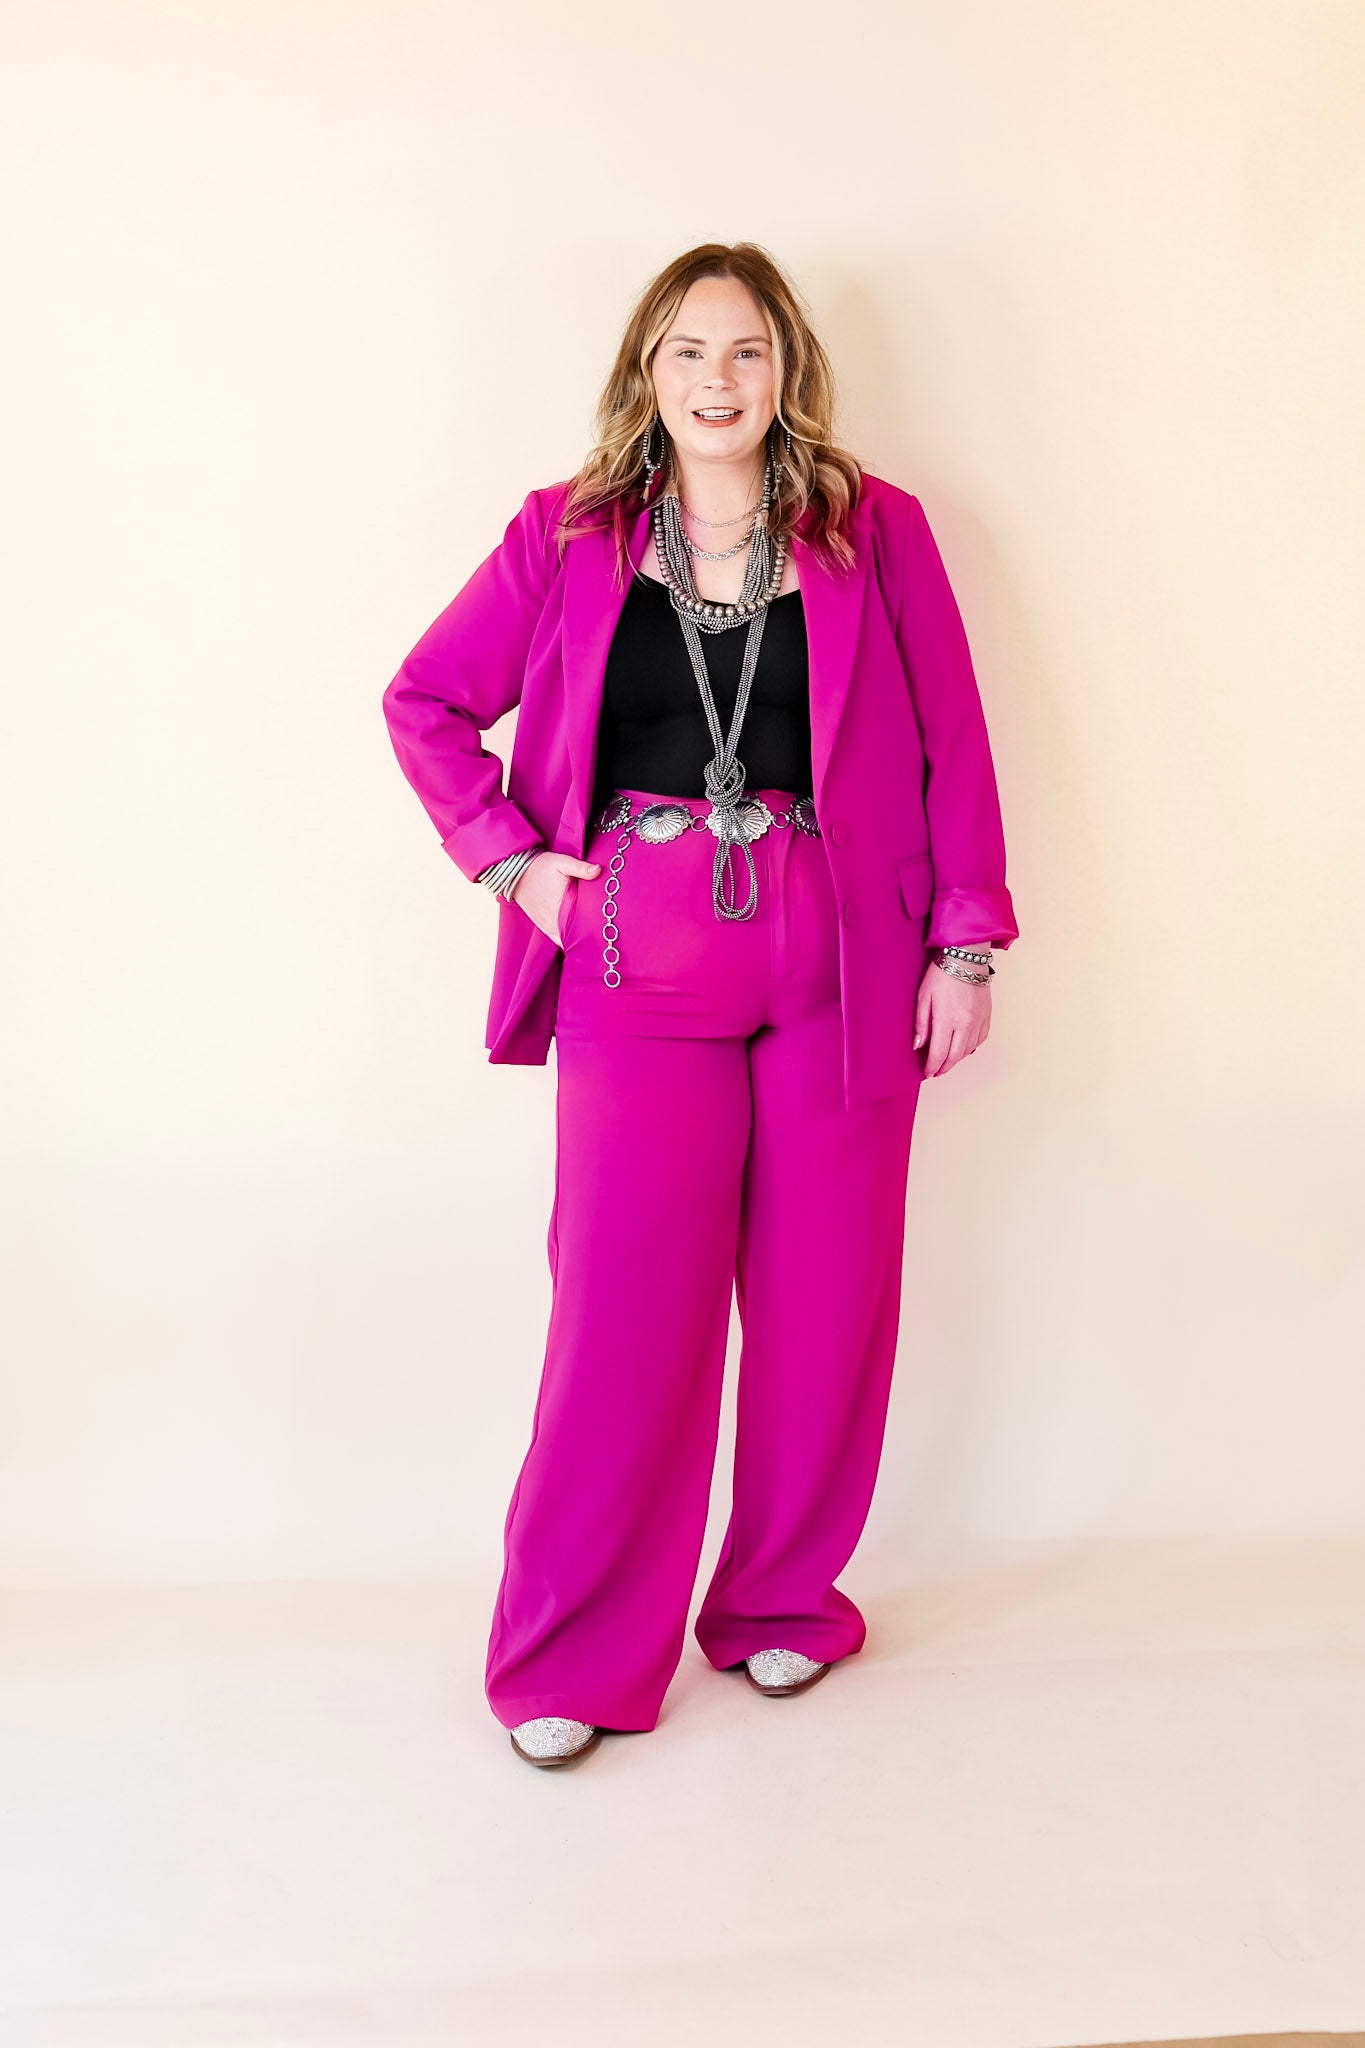 Modern Marvel Button Up Blazer in Magenta Pink - Giddy Up Glamour Boutique